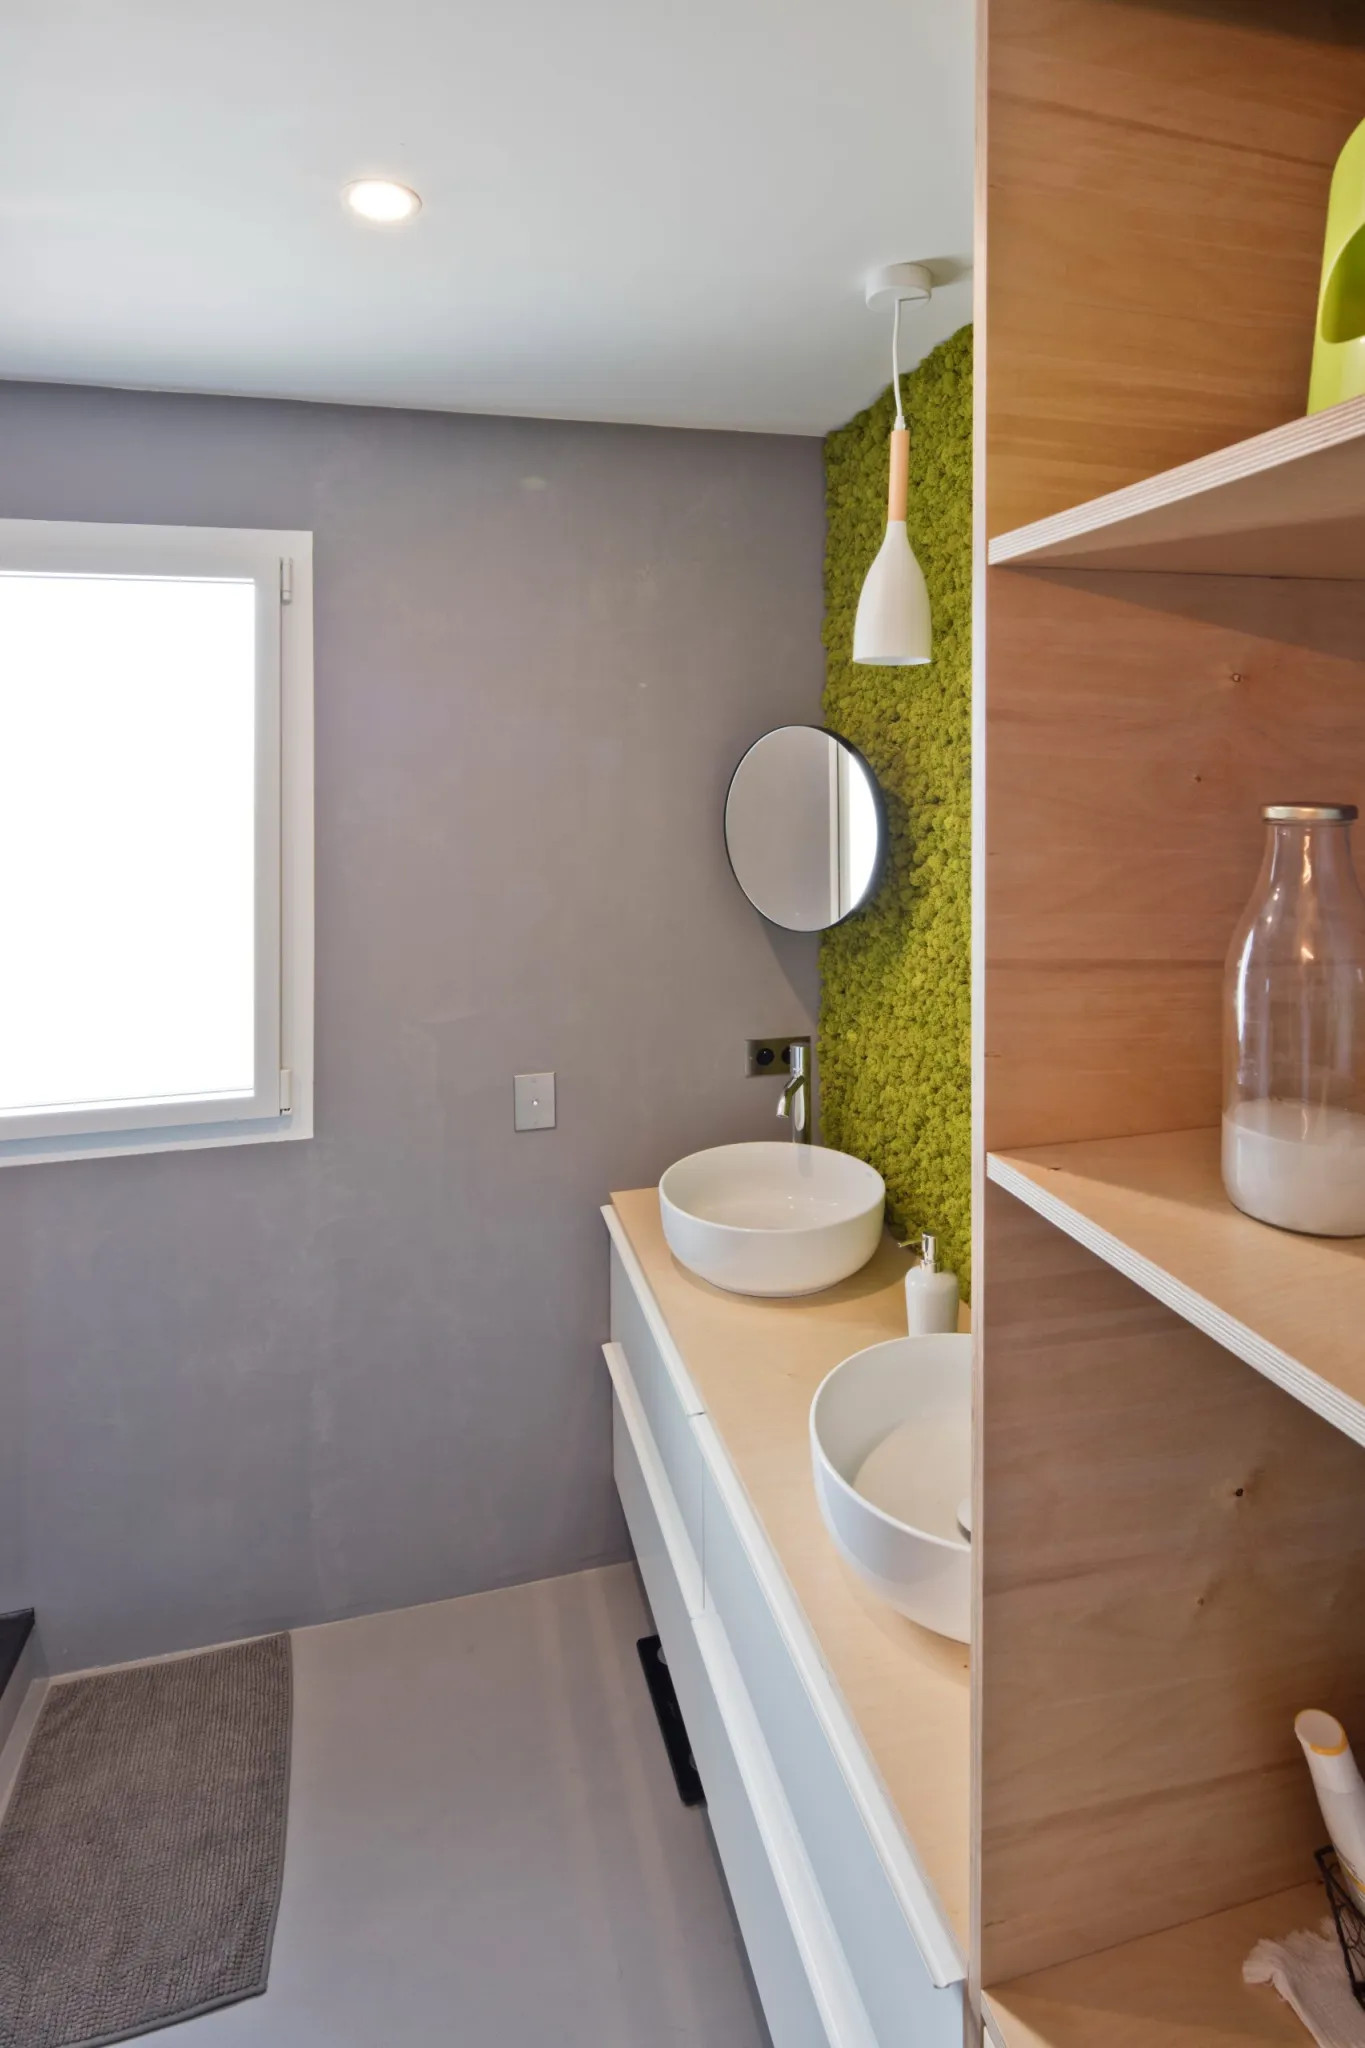 salle de bain avec mur végétal